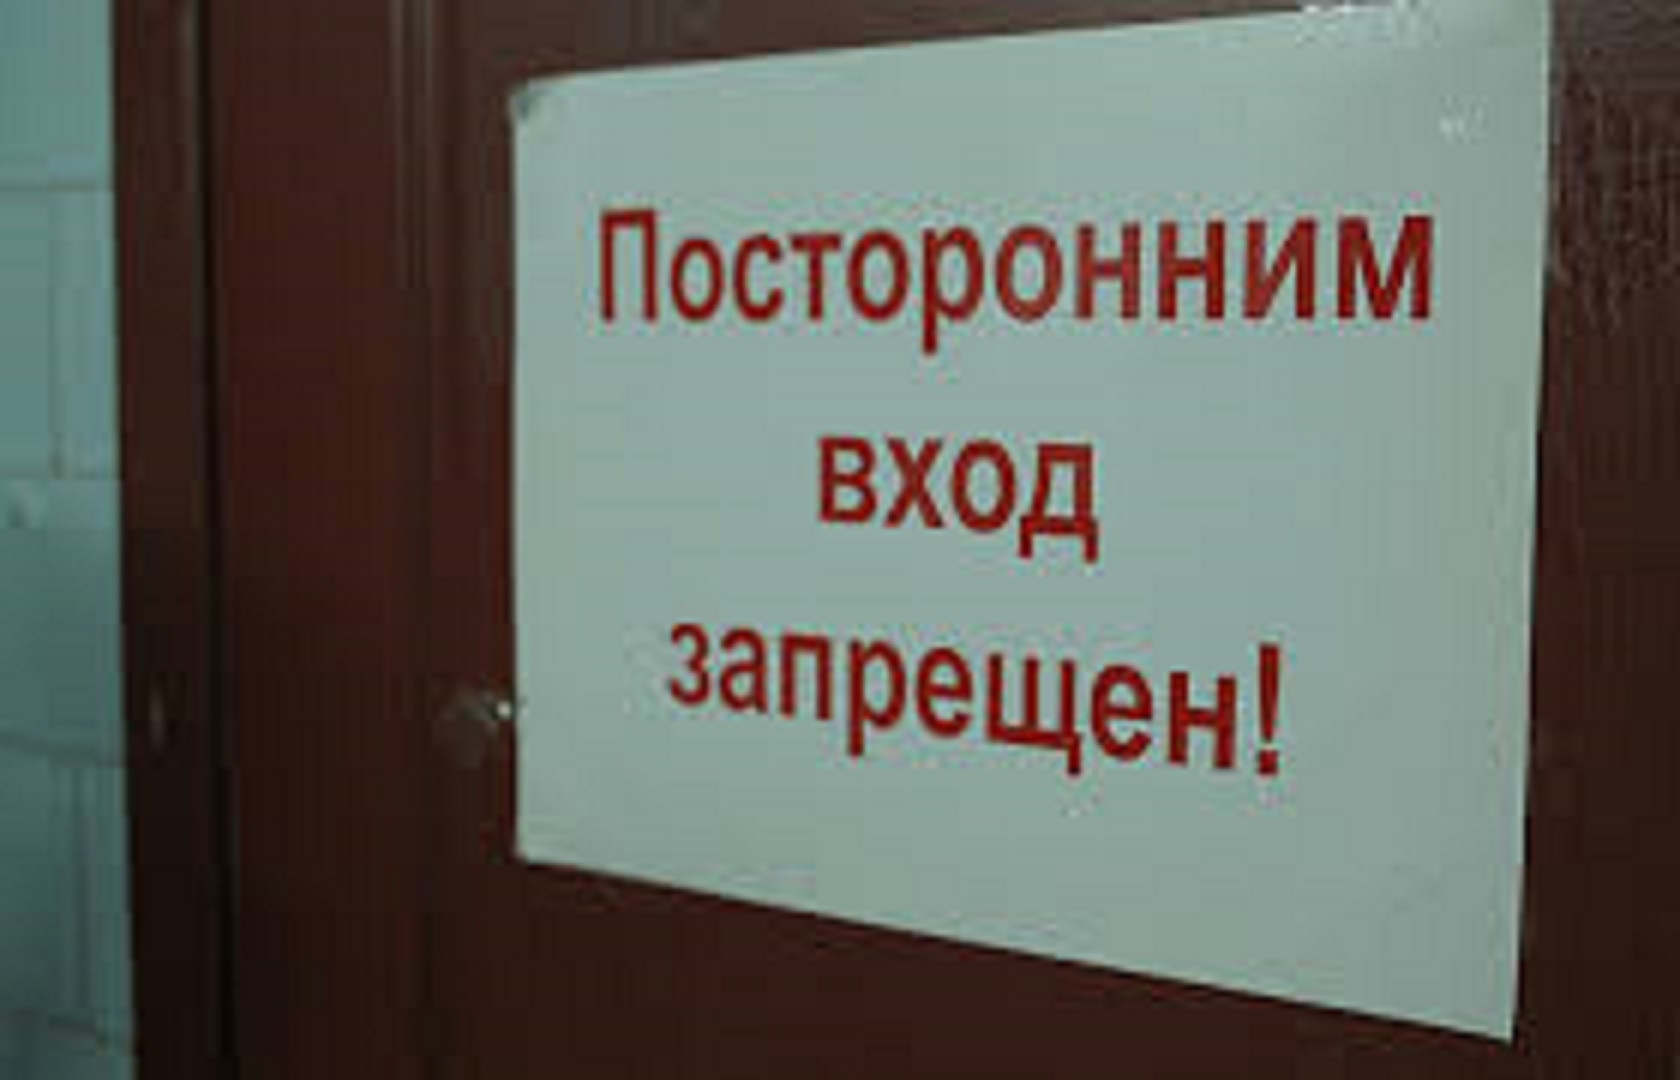 Надпись посторонним вход запрещен